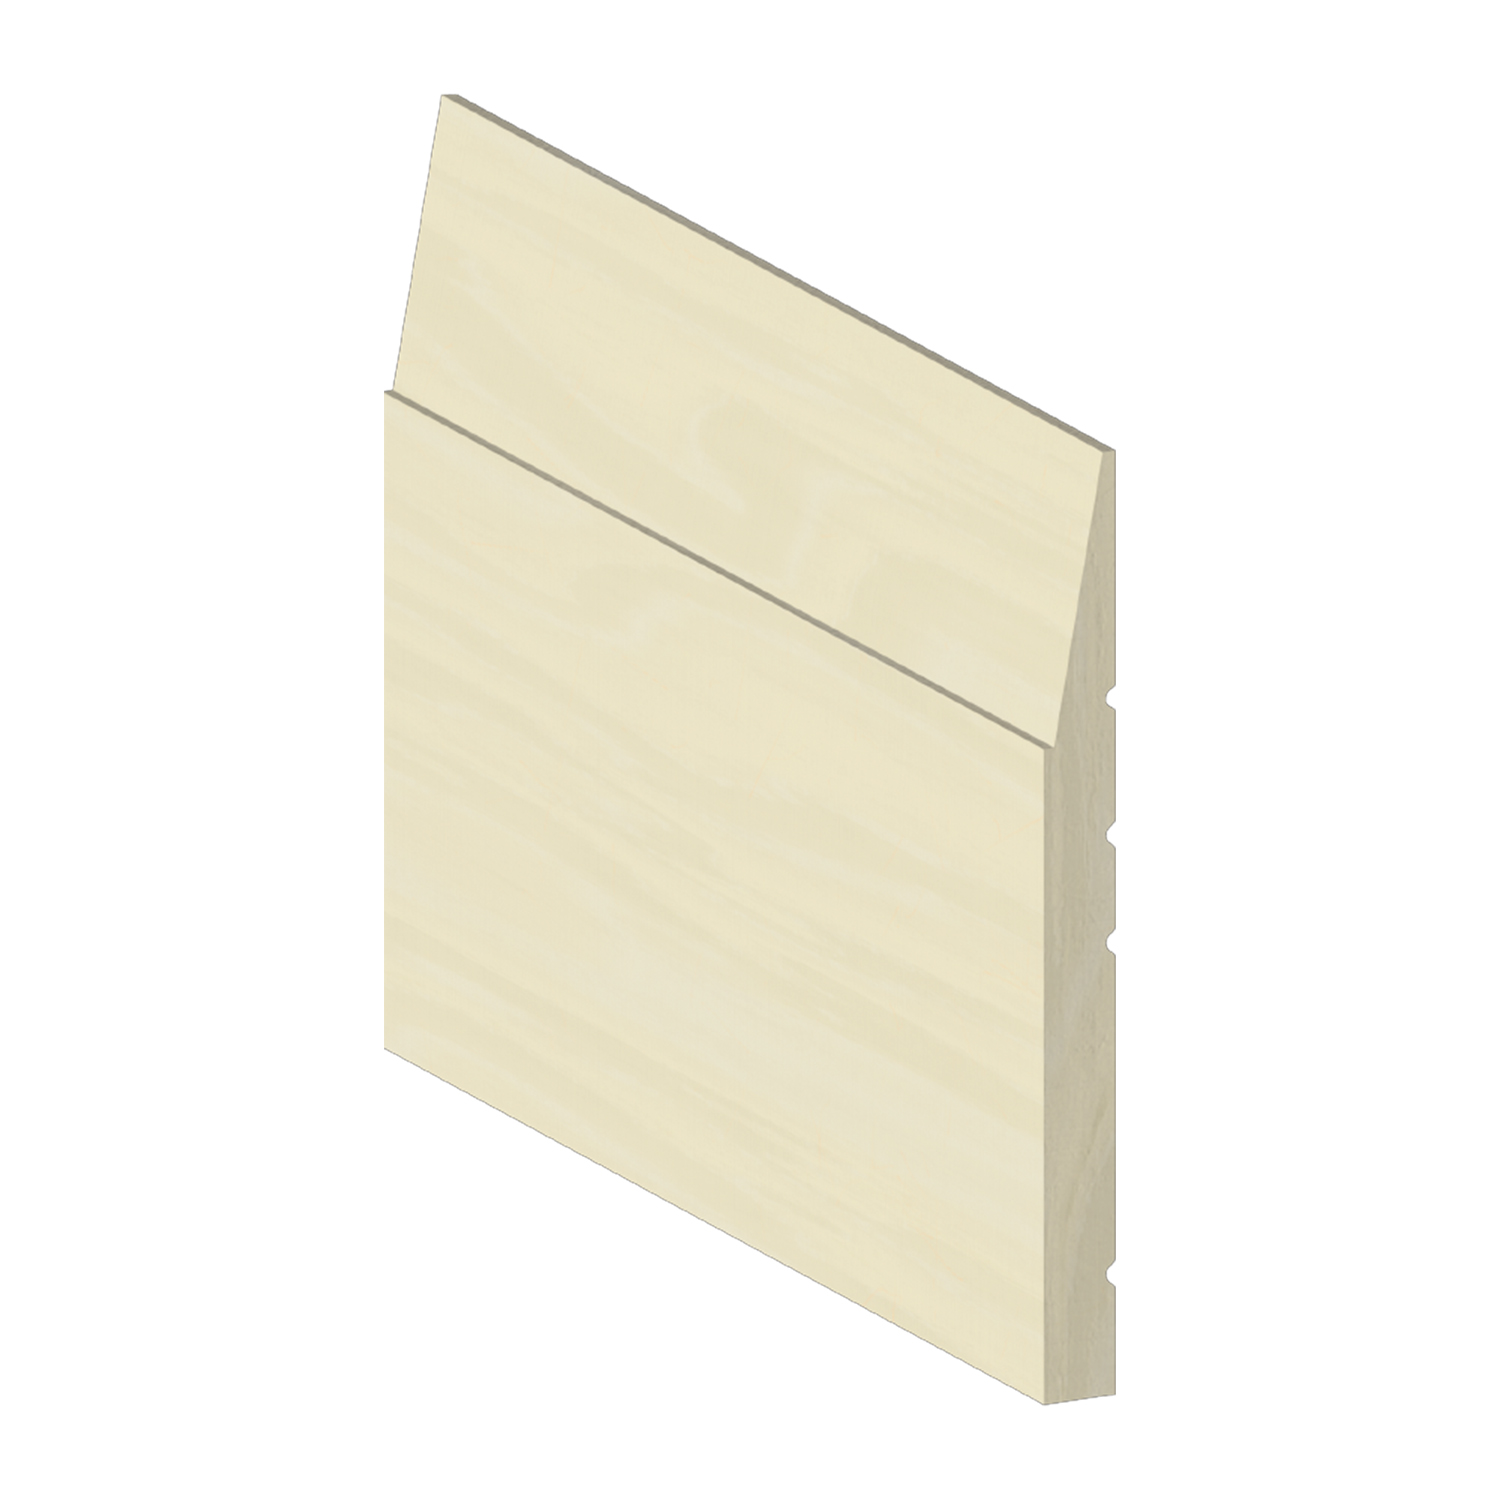 Base Board Poplar Step Bevel 7 1/4 X 5/8 (3/4) - basepoplar7-1/4 - baseboard - SOLD BY FEET